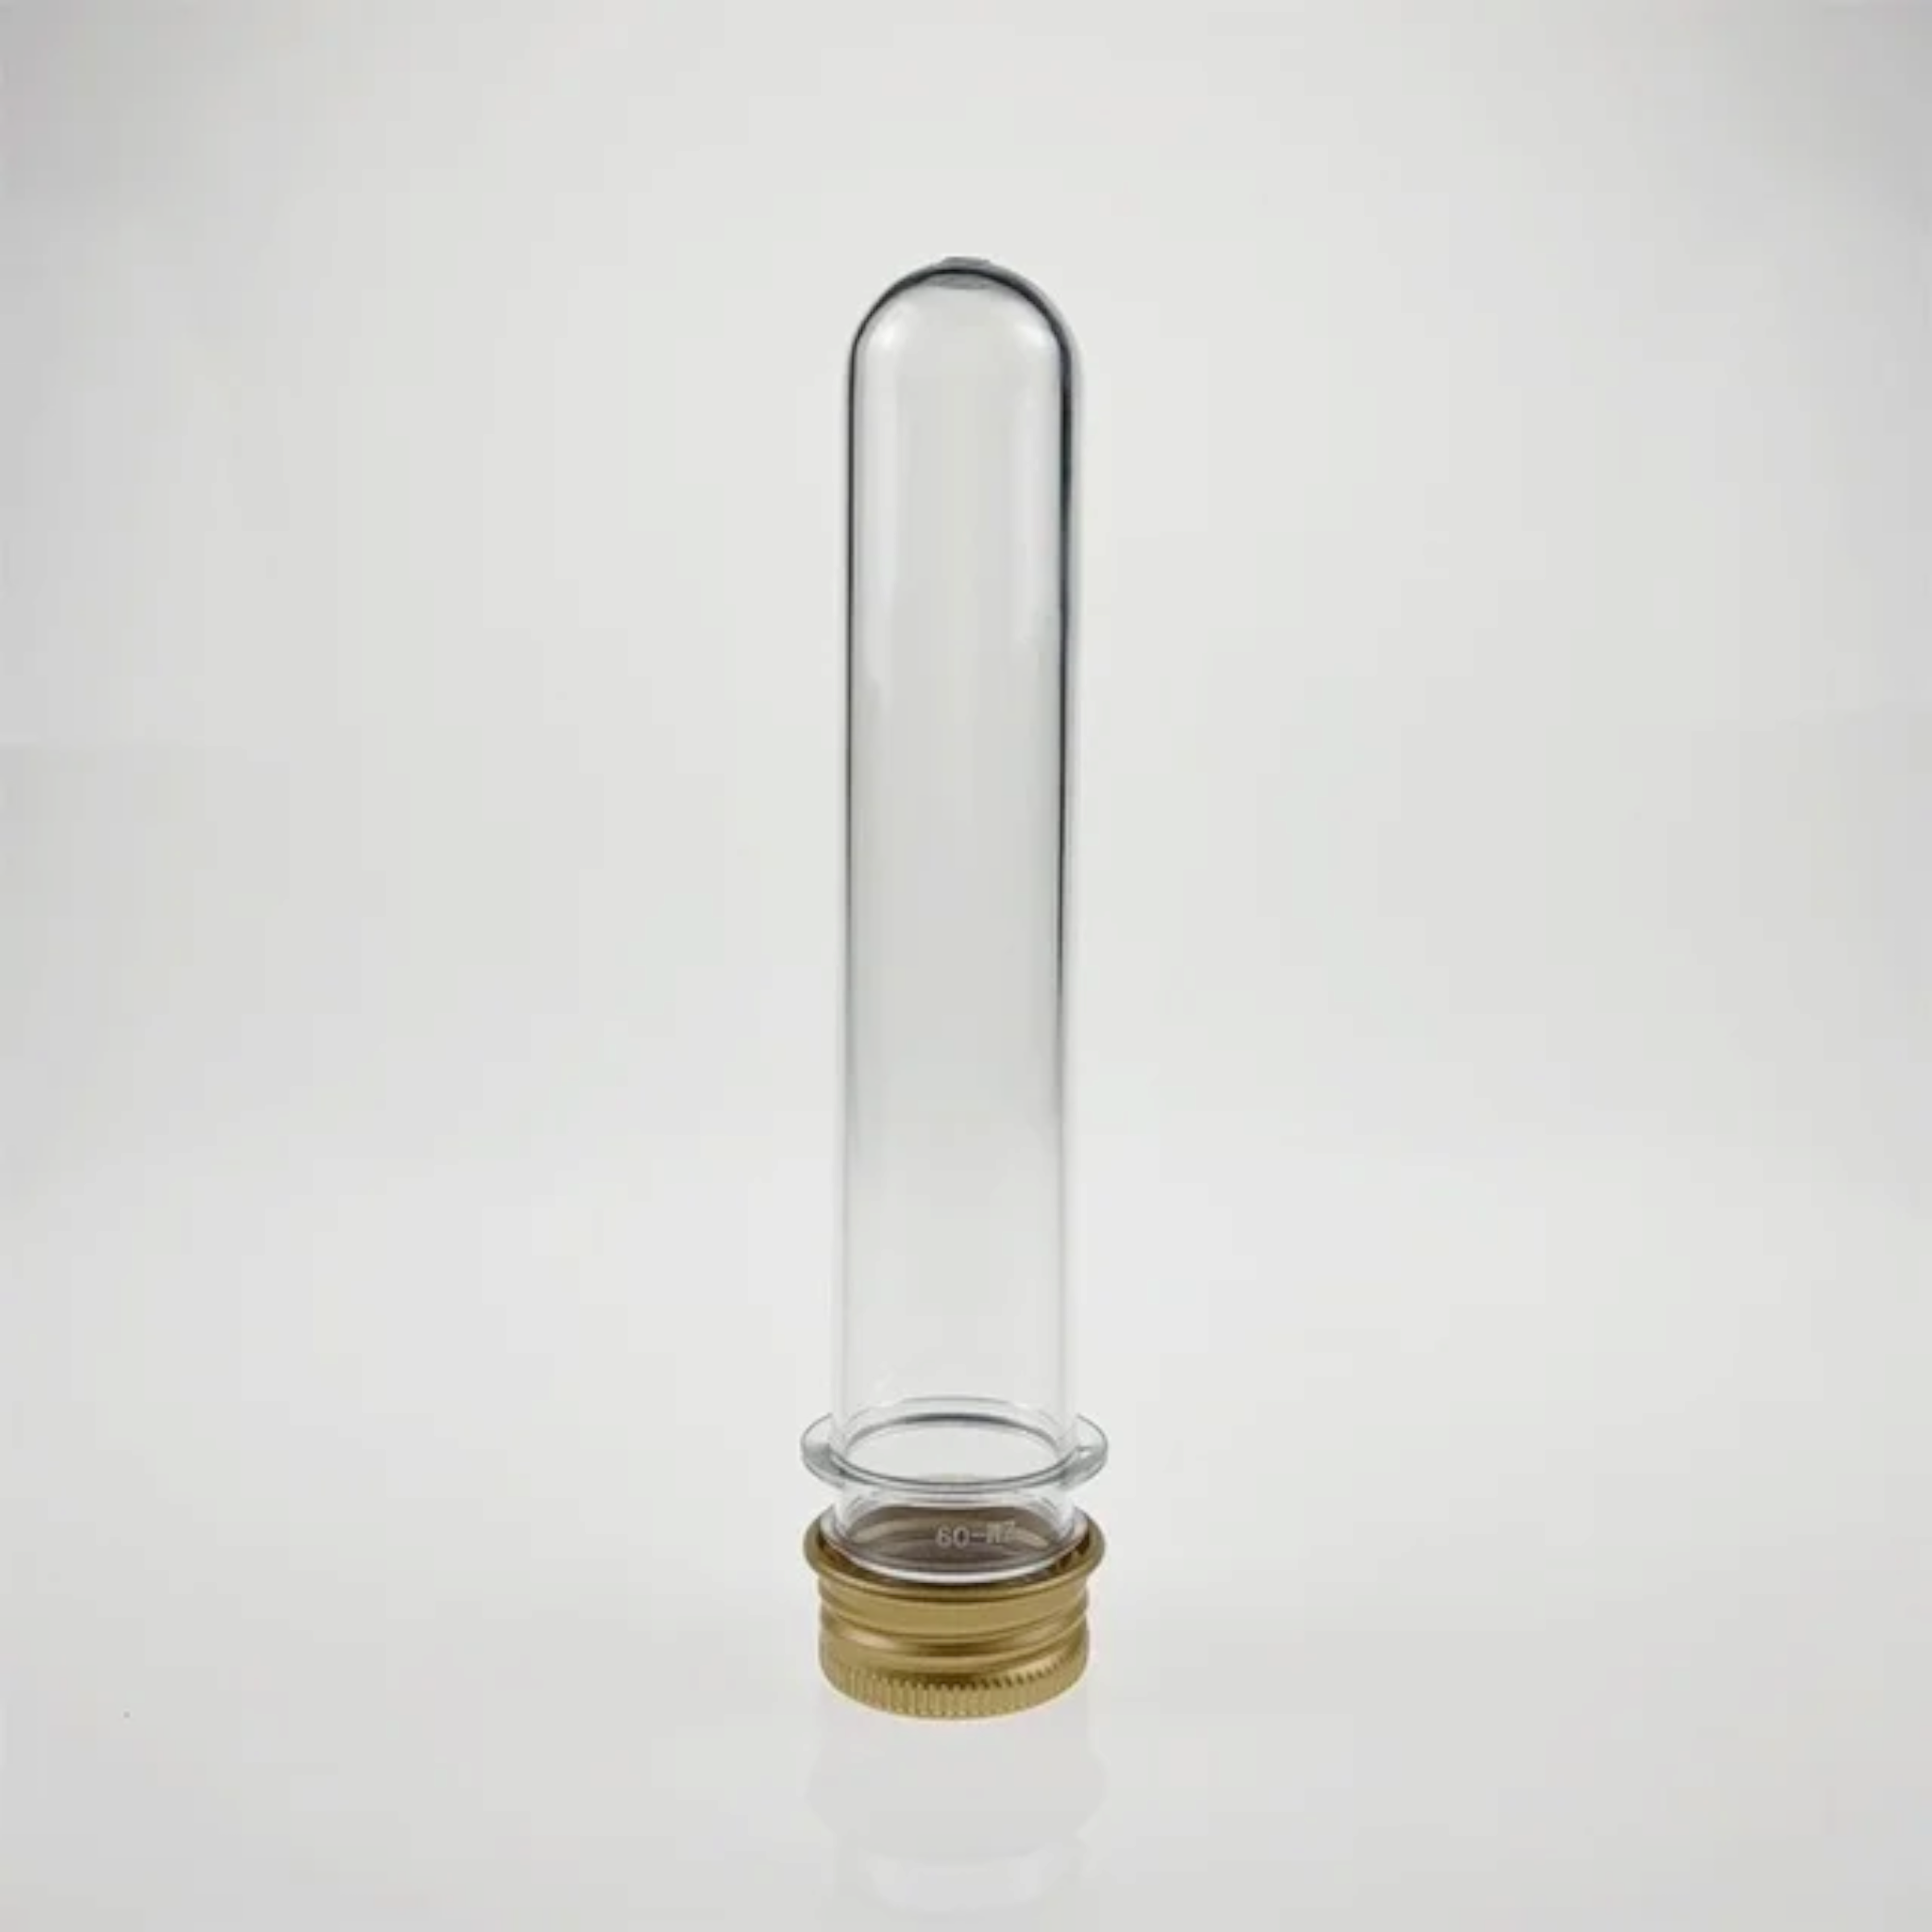 Plastic PET Test Tube 10cm - Vials Container Bottle Tube Shape with Lid